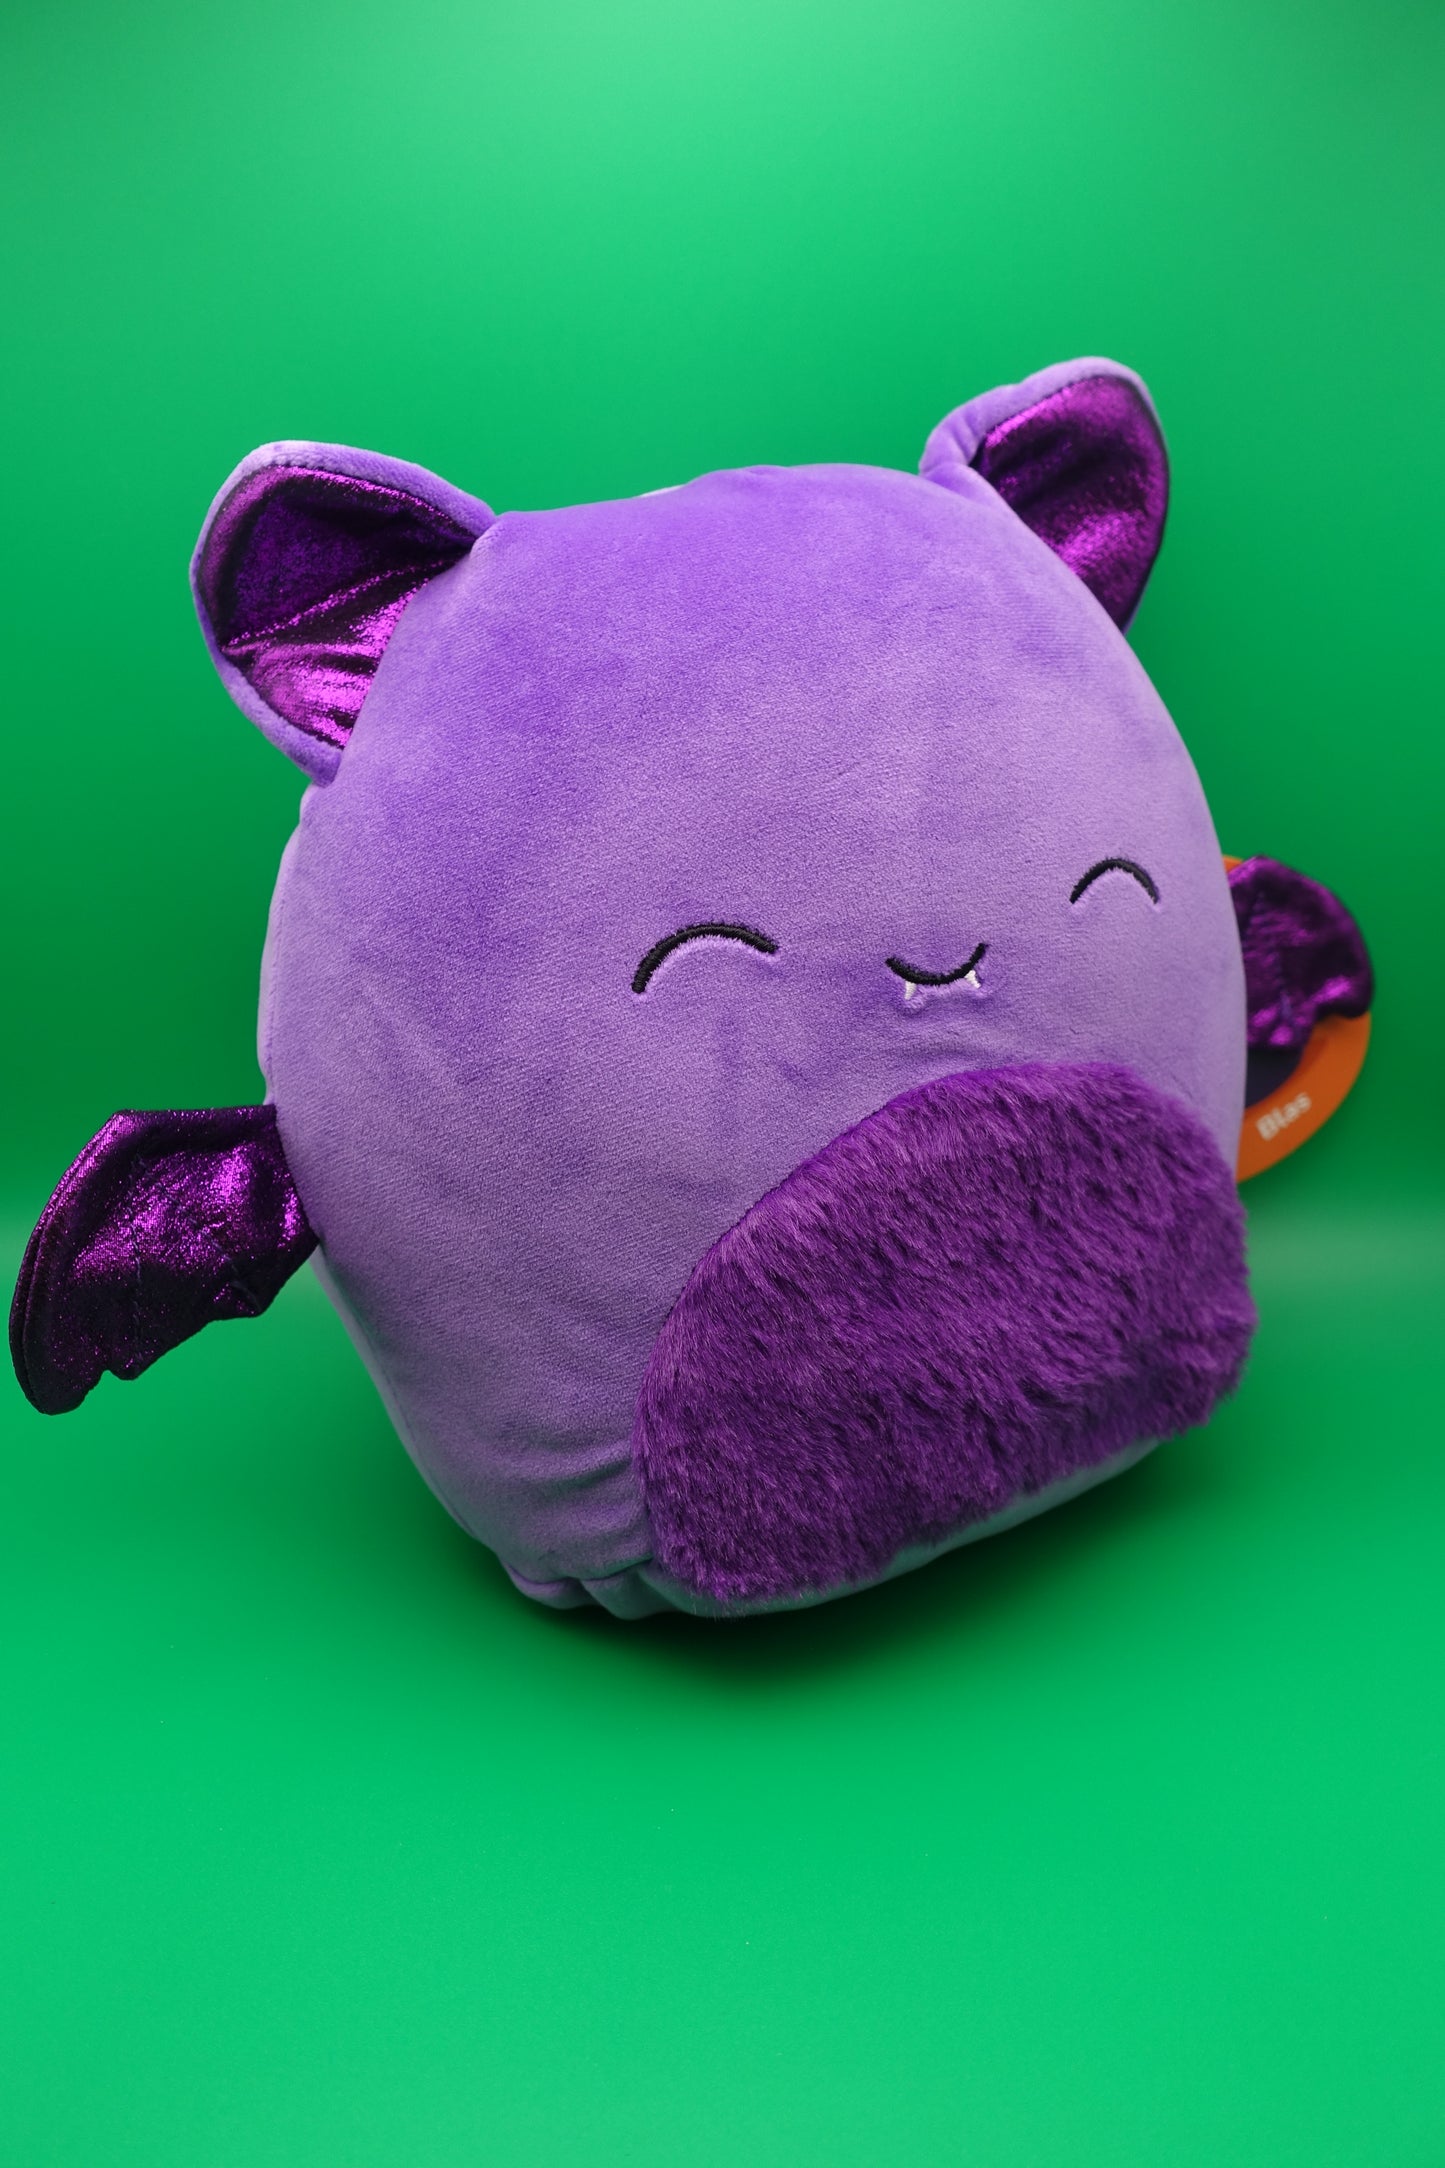 Official Halloween Blas the Purple Bat Squishmallow 8 Inch